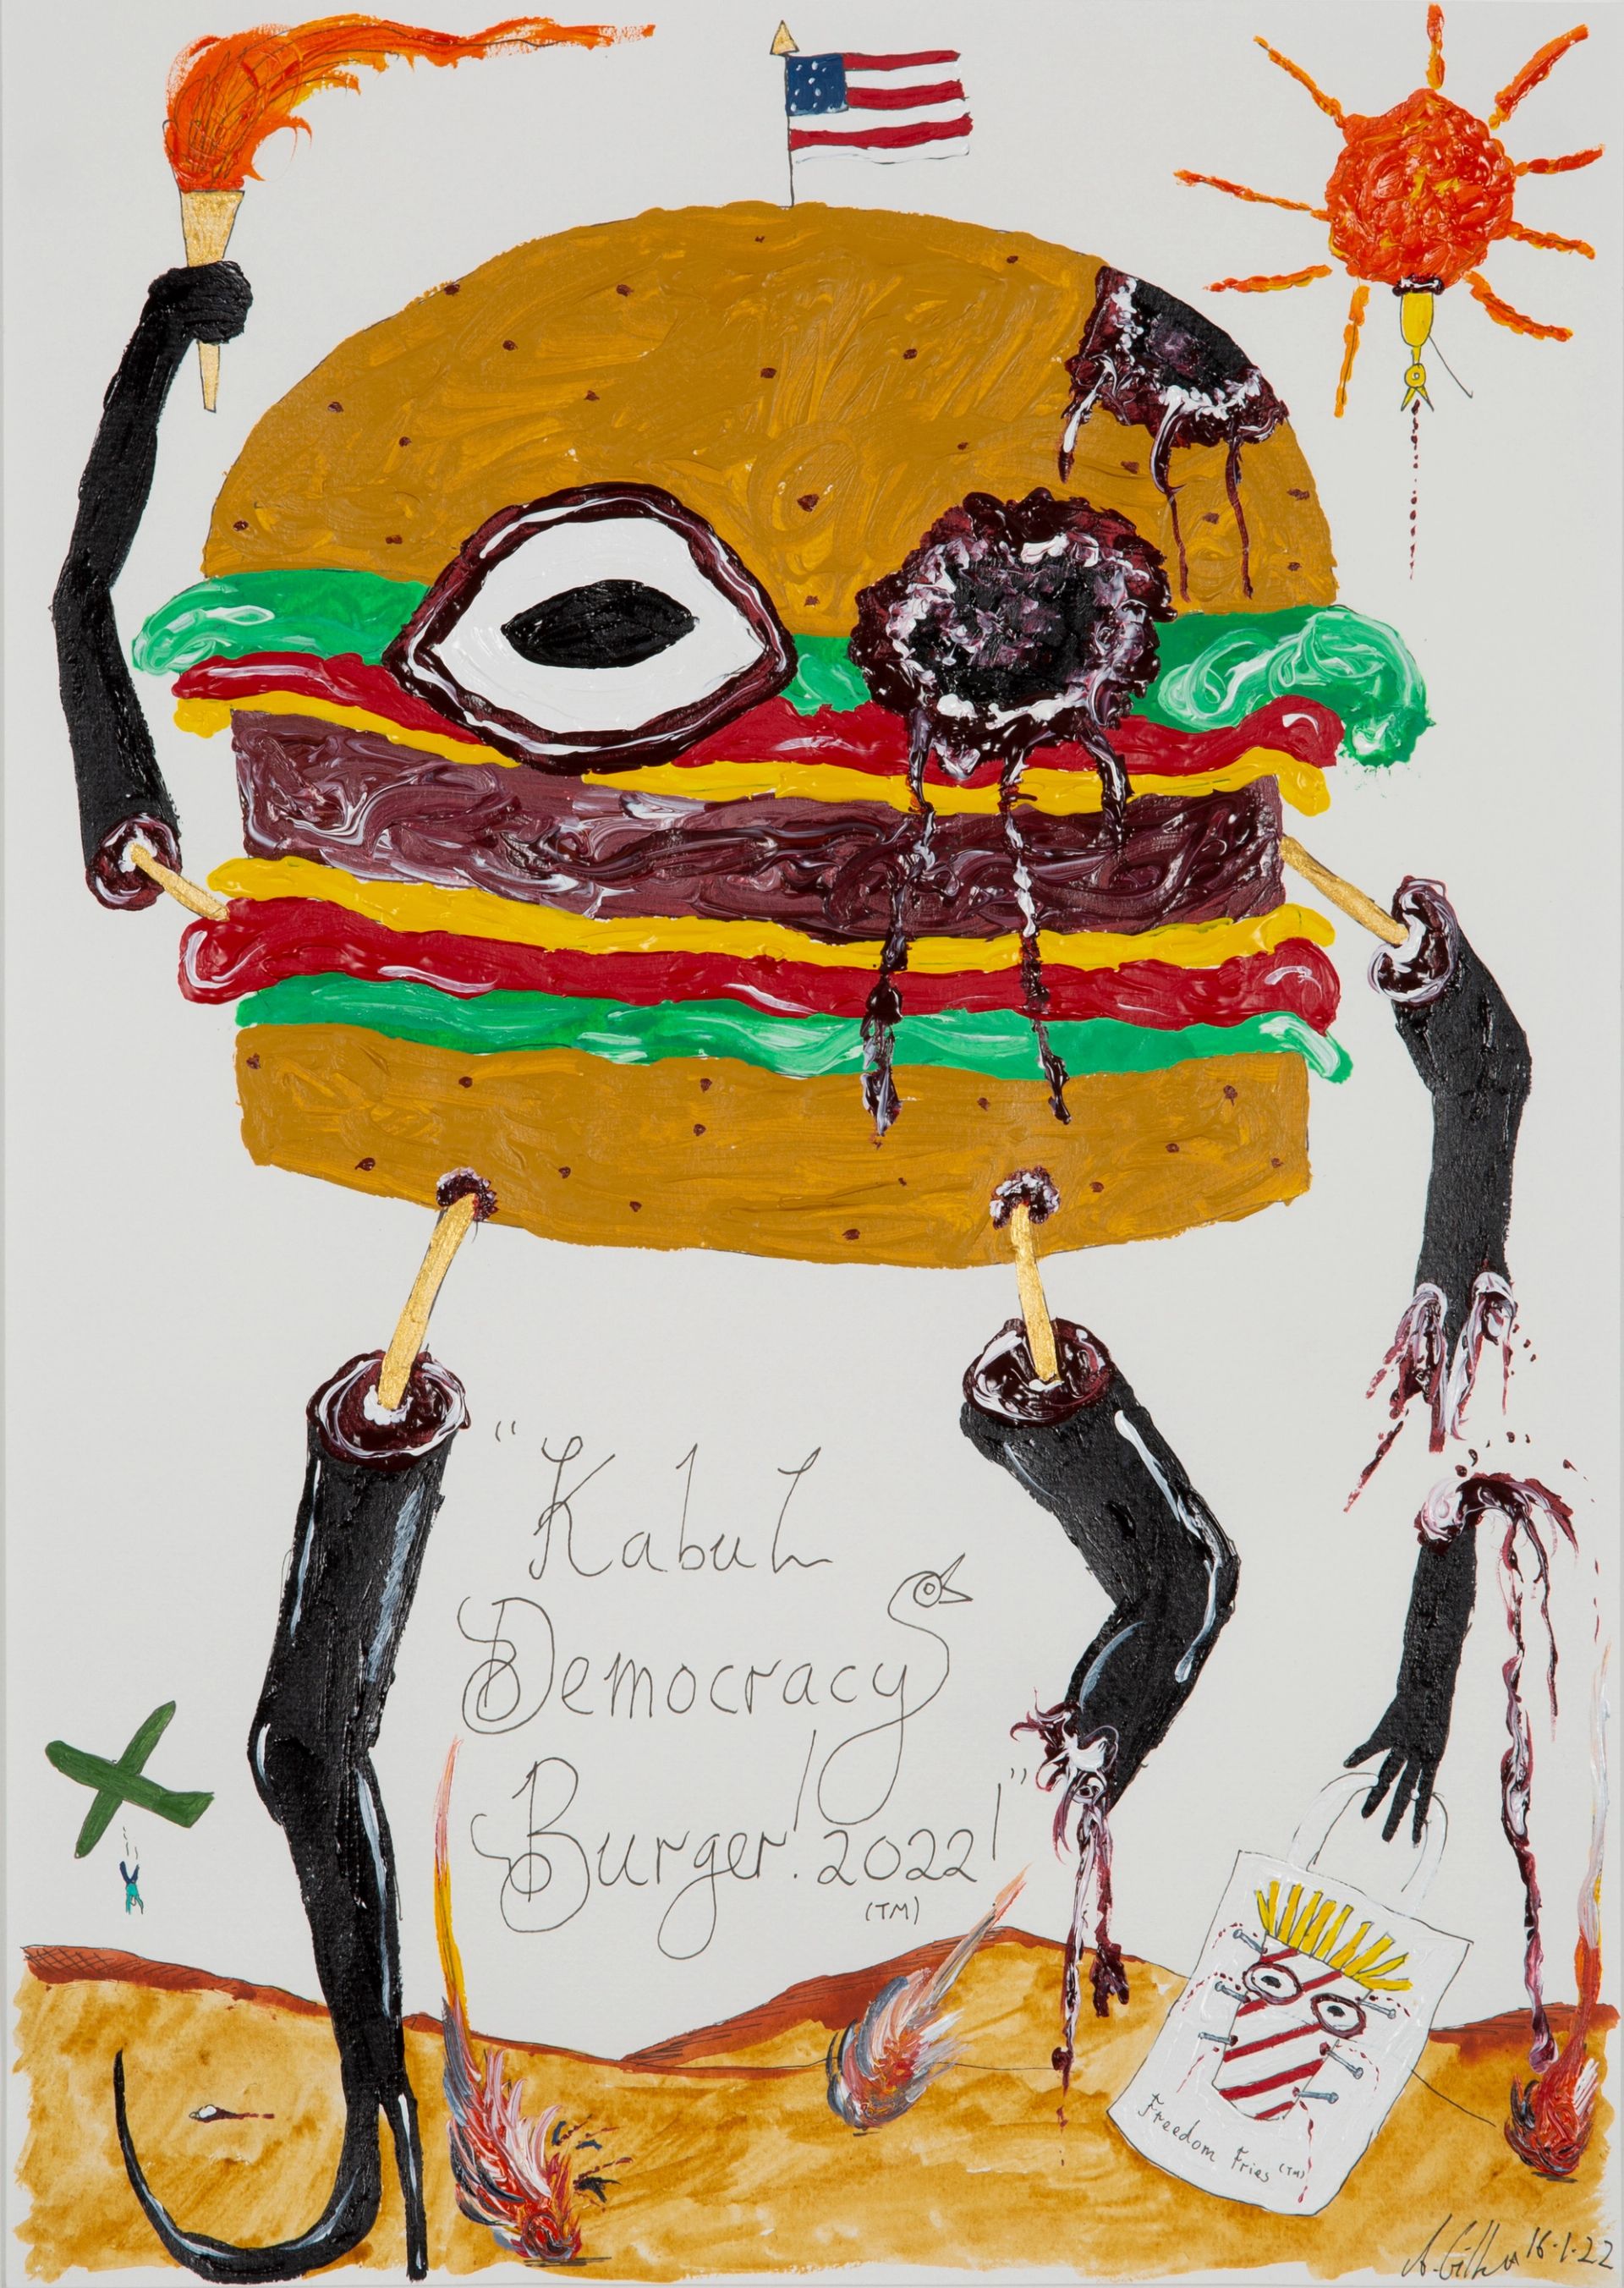 Andrew Gilbert, Kabul Democracy Burger! 2022!, 2022, fineliner watercolour, acrylic on paper, 40 × 30, photo: Constanza Meléndez